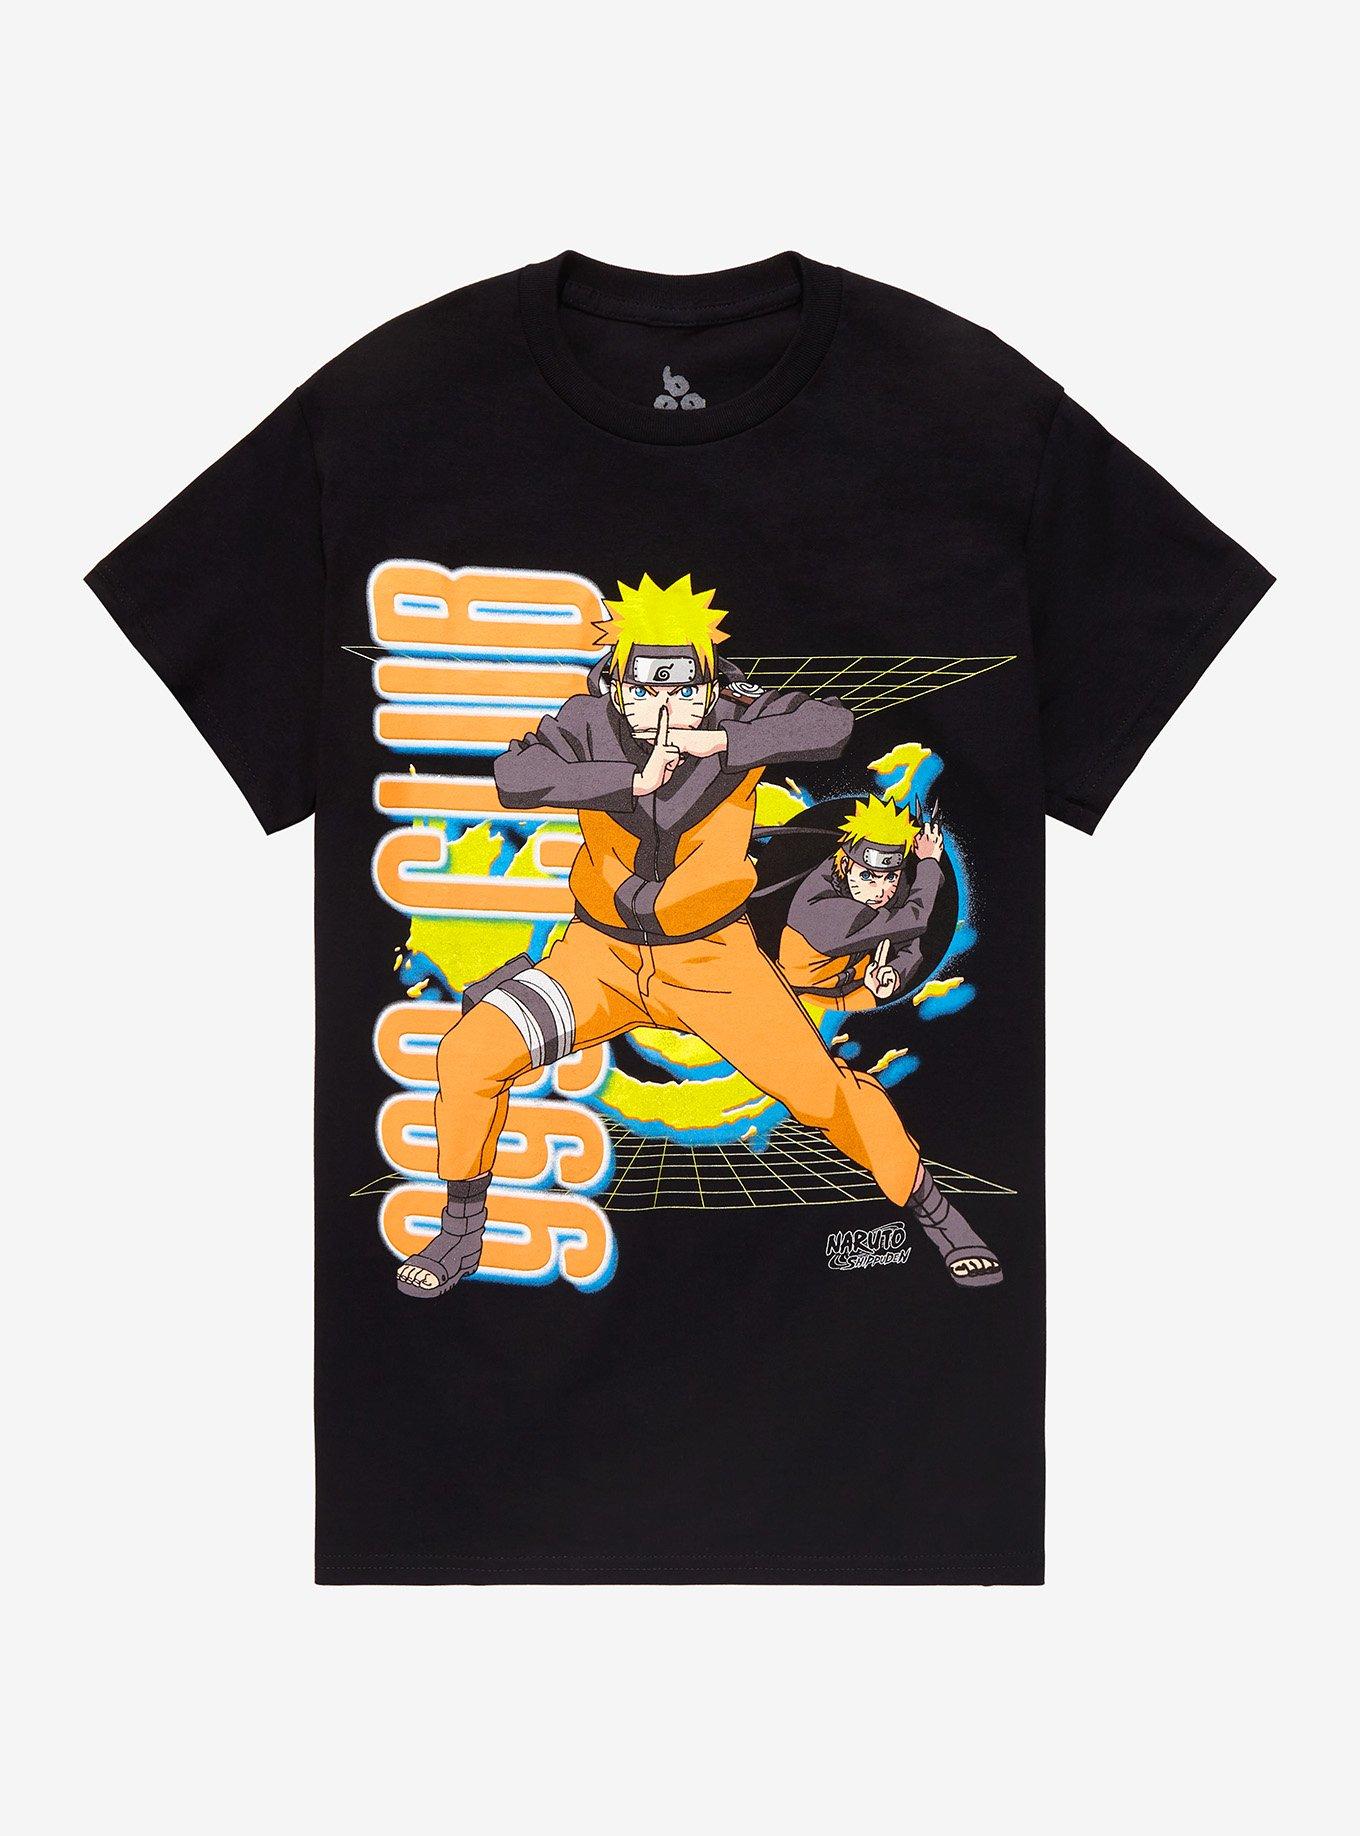 999 By Juice WRLD X Naruto Uzumaki T-Shirt Hot Topic Exclusive | Hot Topic